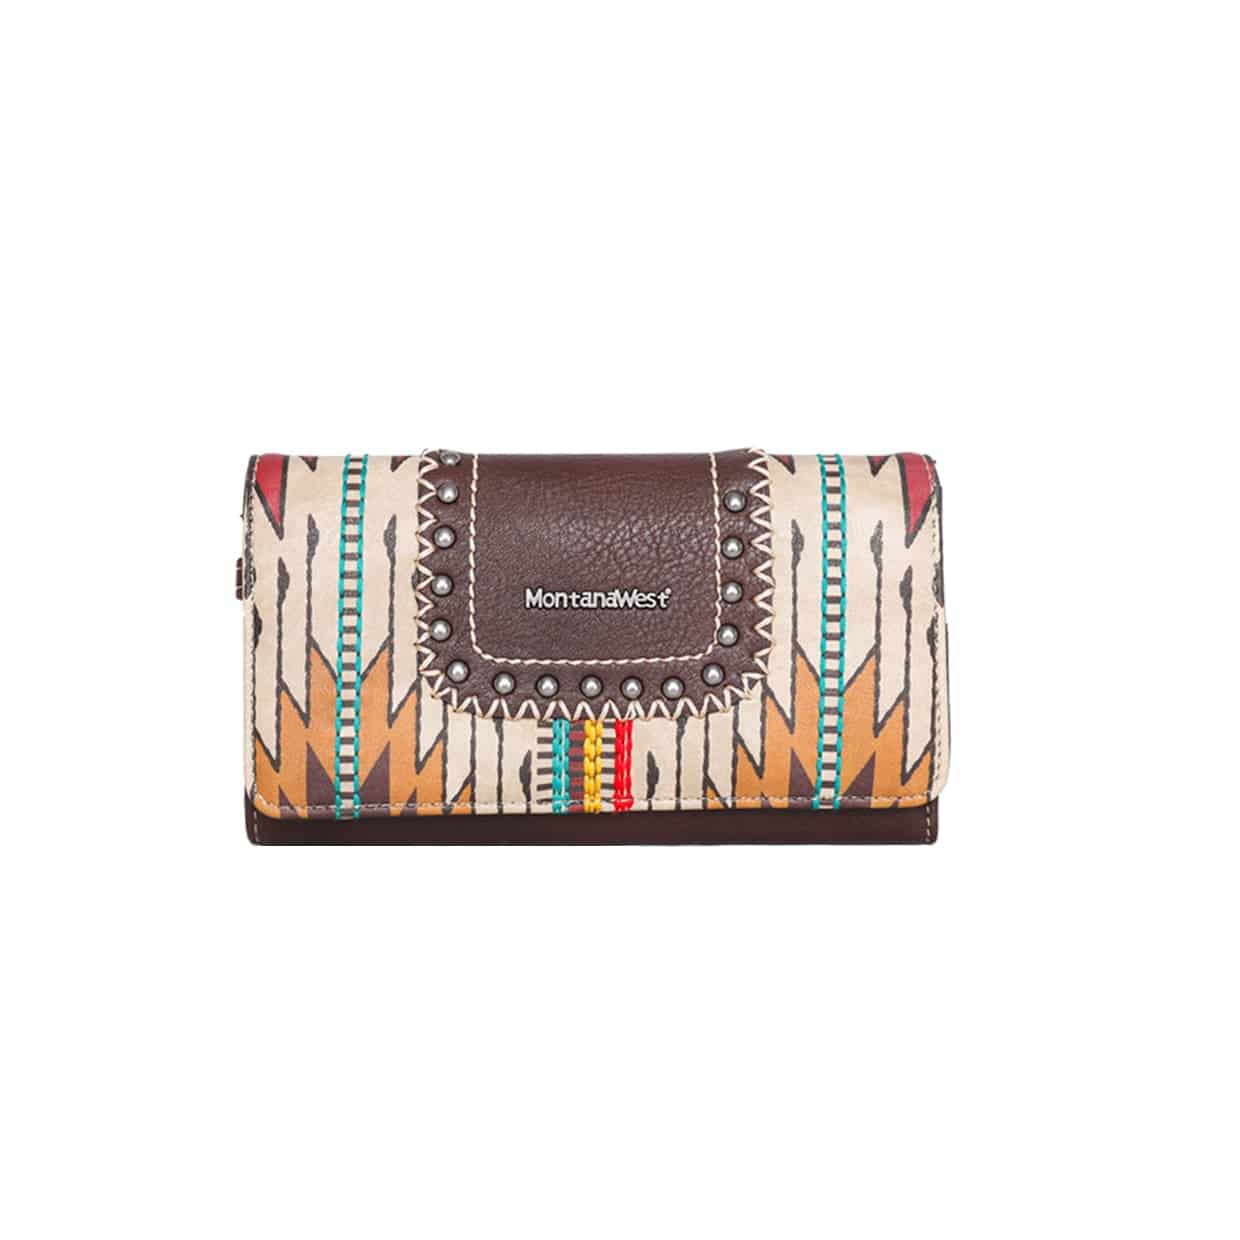 Aztec print brown leather wallet